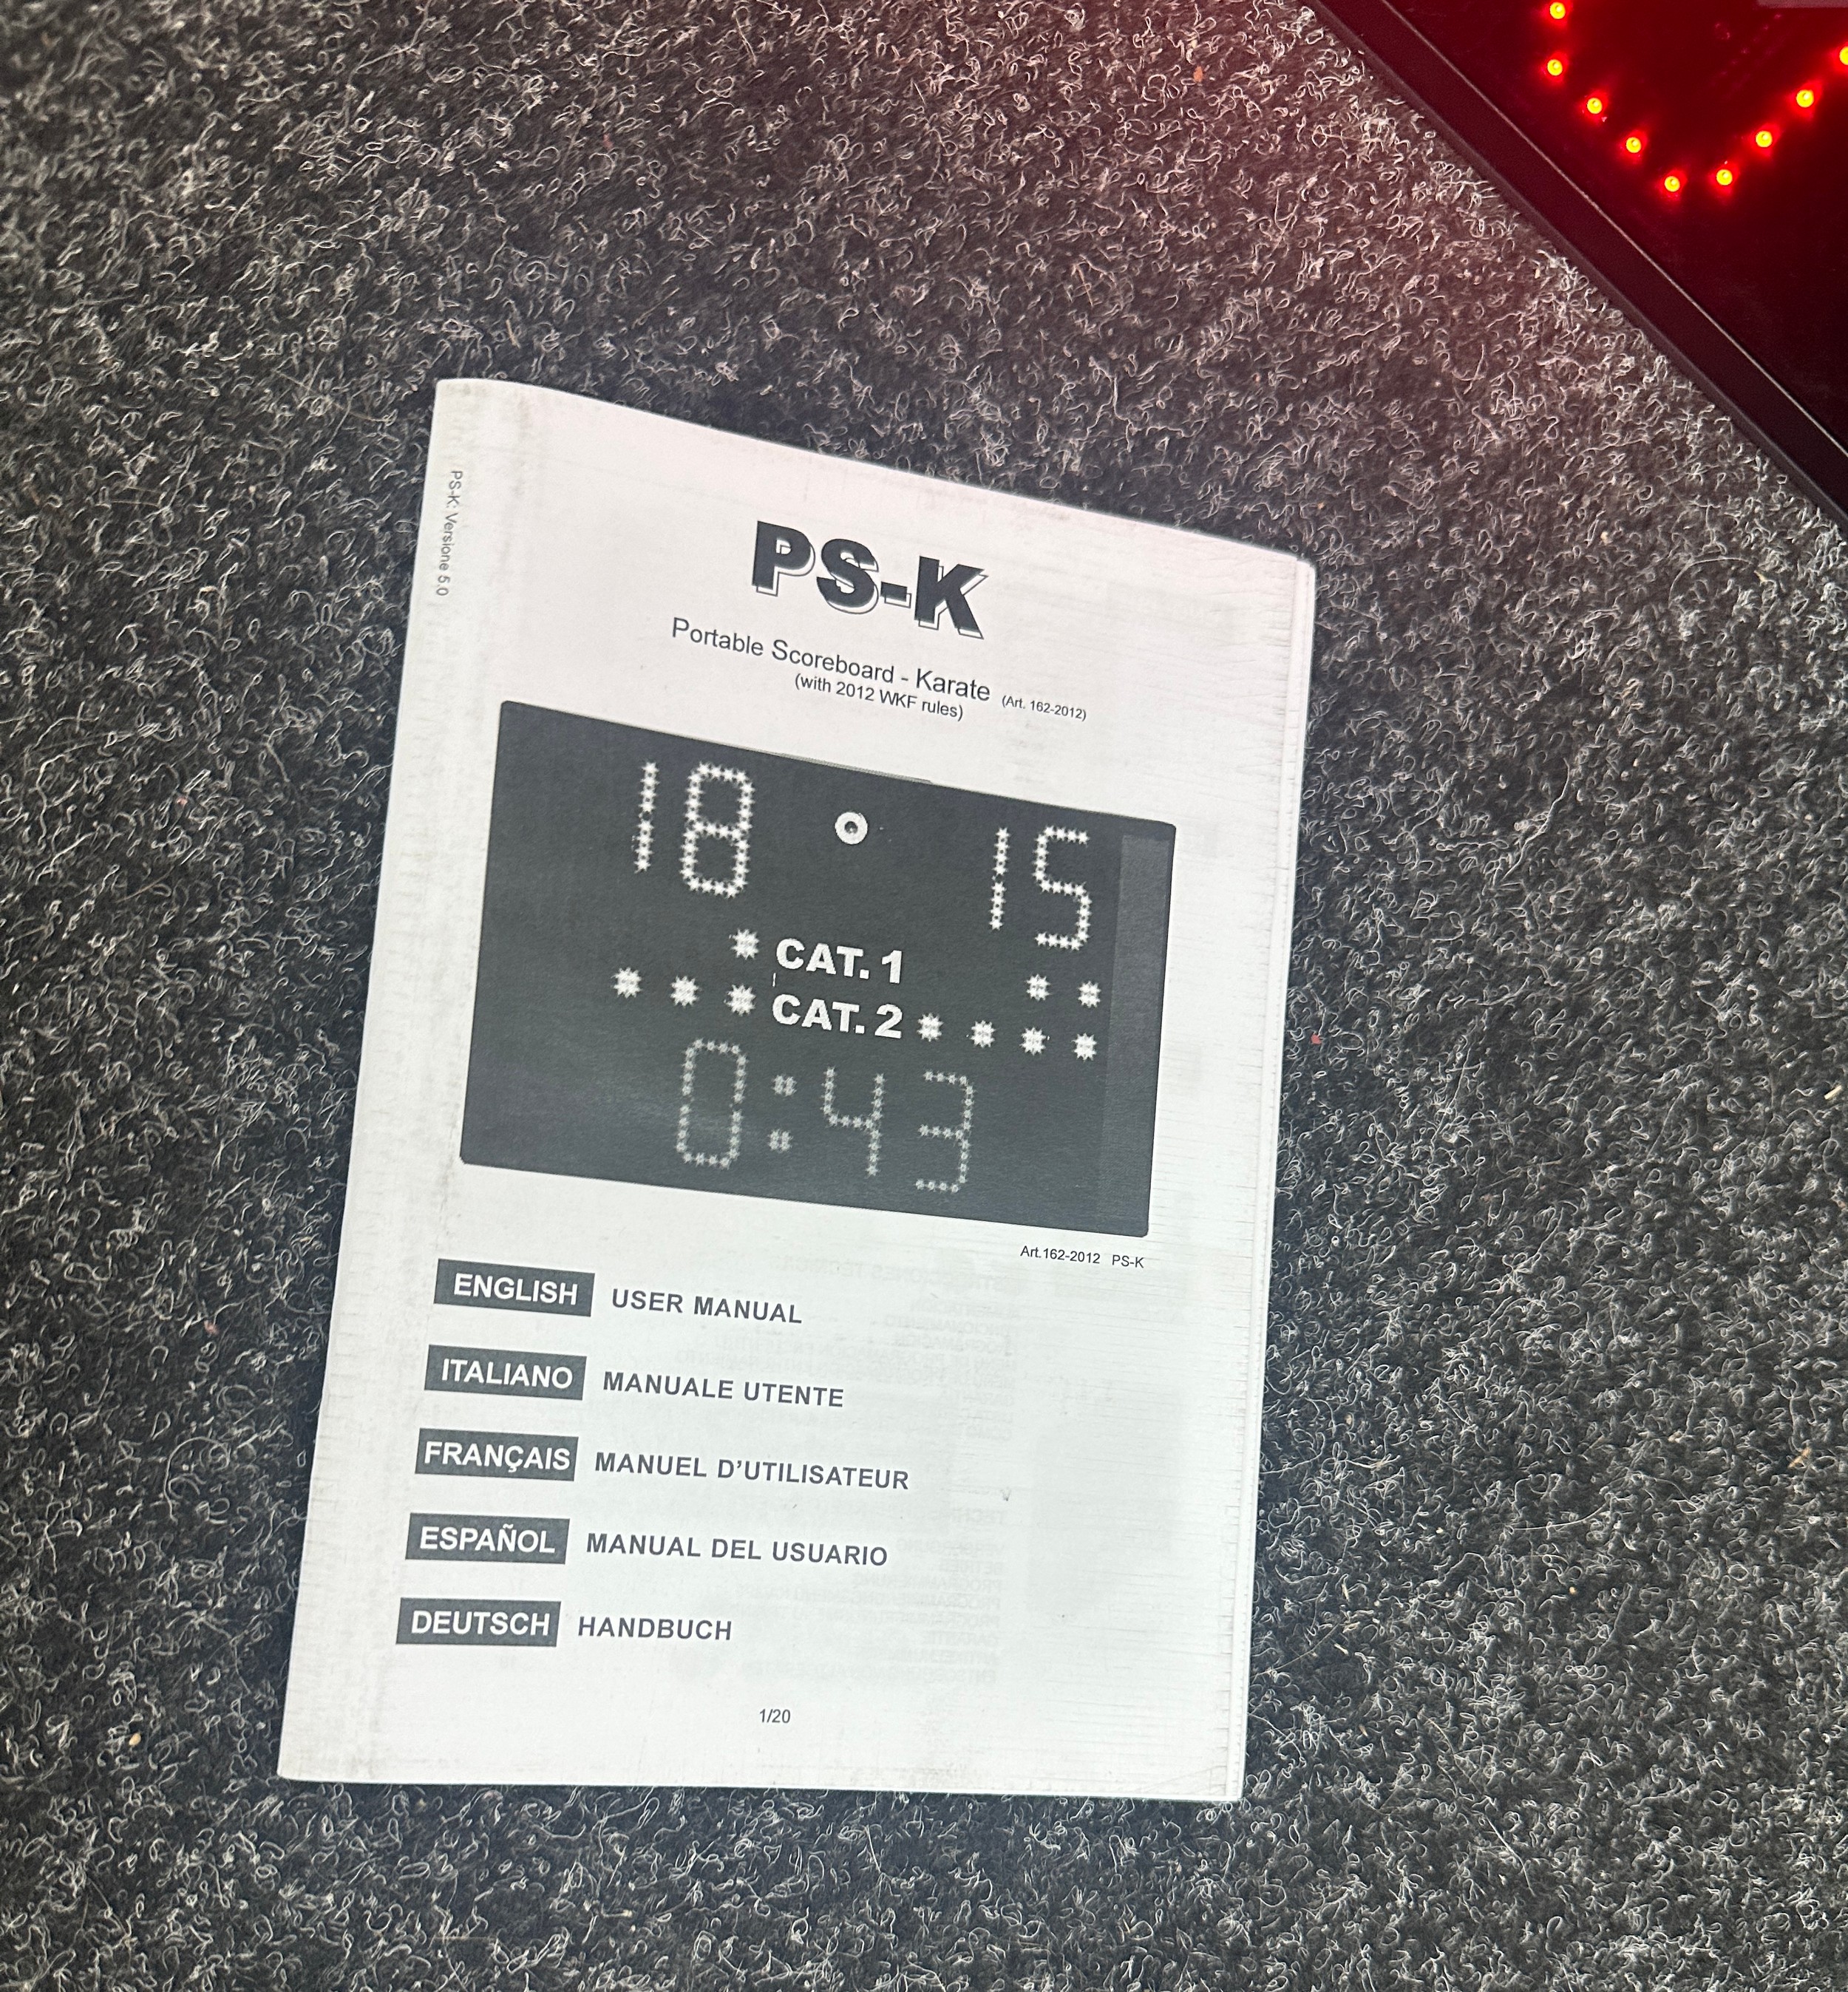 PS-K Portable Scoreboard- Karate model No Art.162-2012 PS-K with flight case - in working order - Image 3 of 7